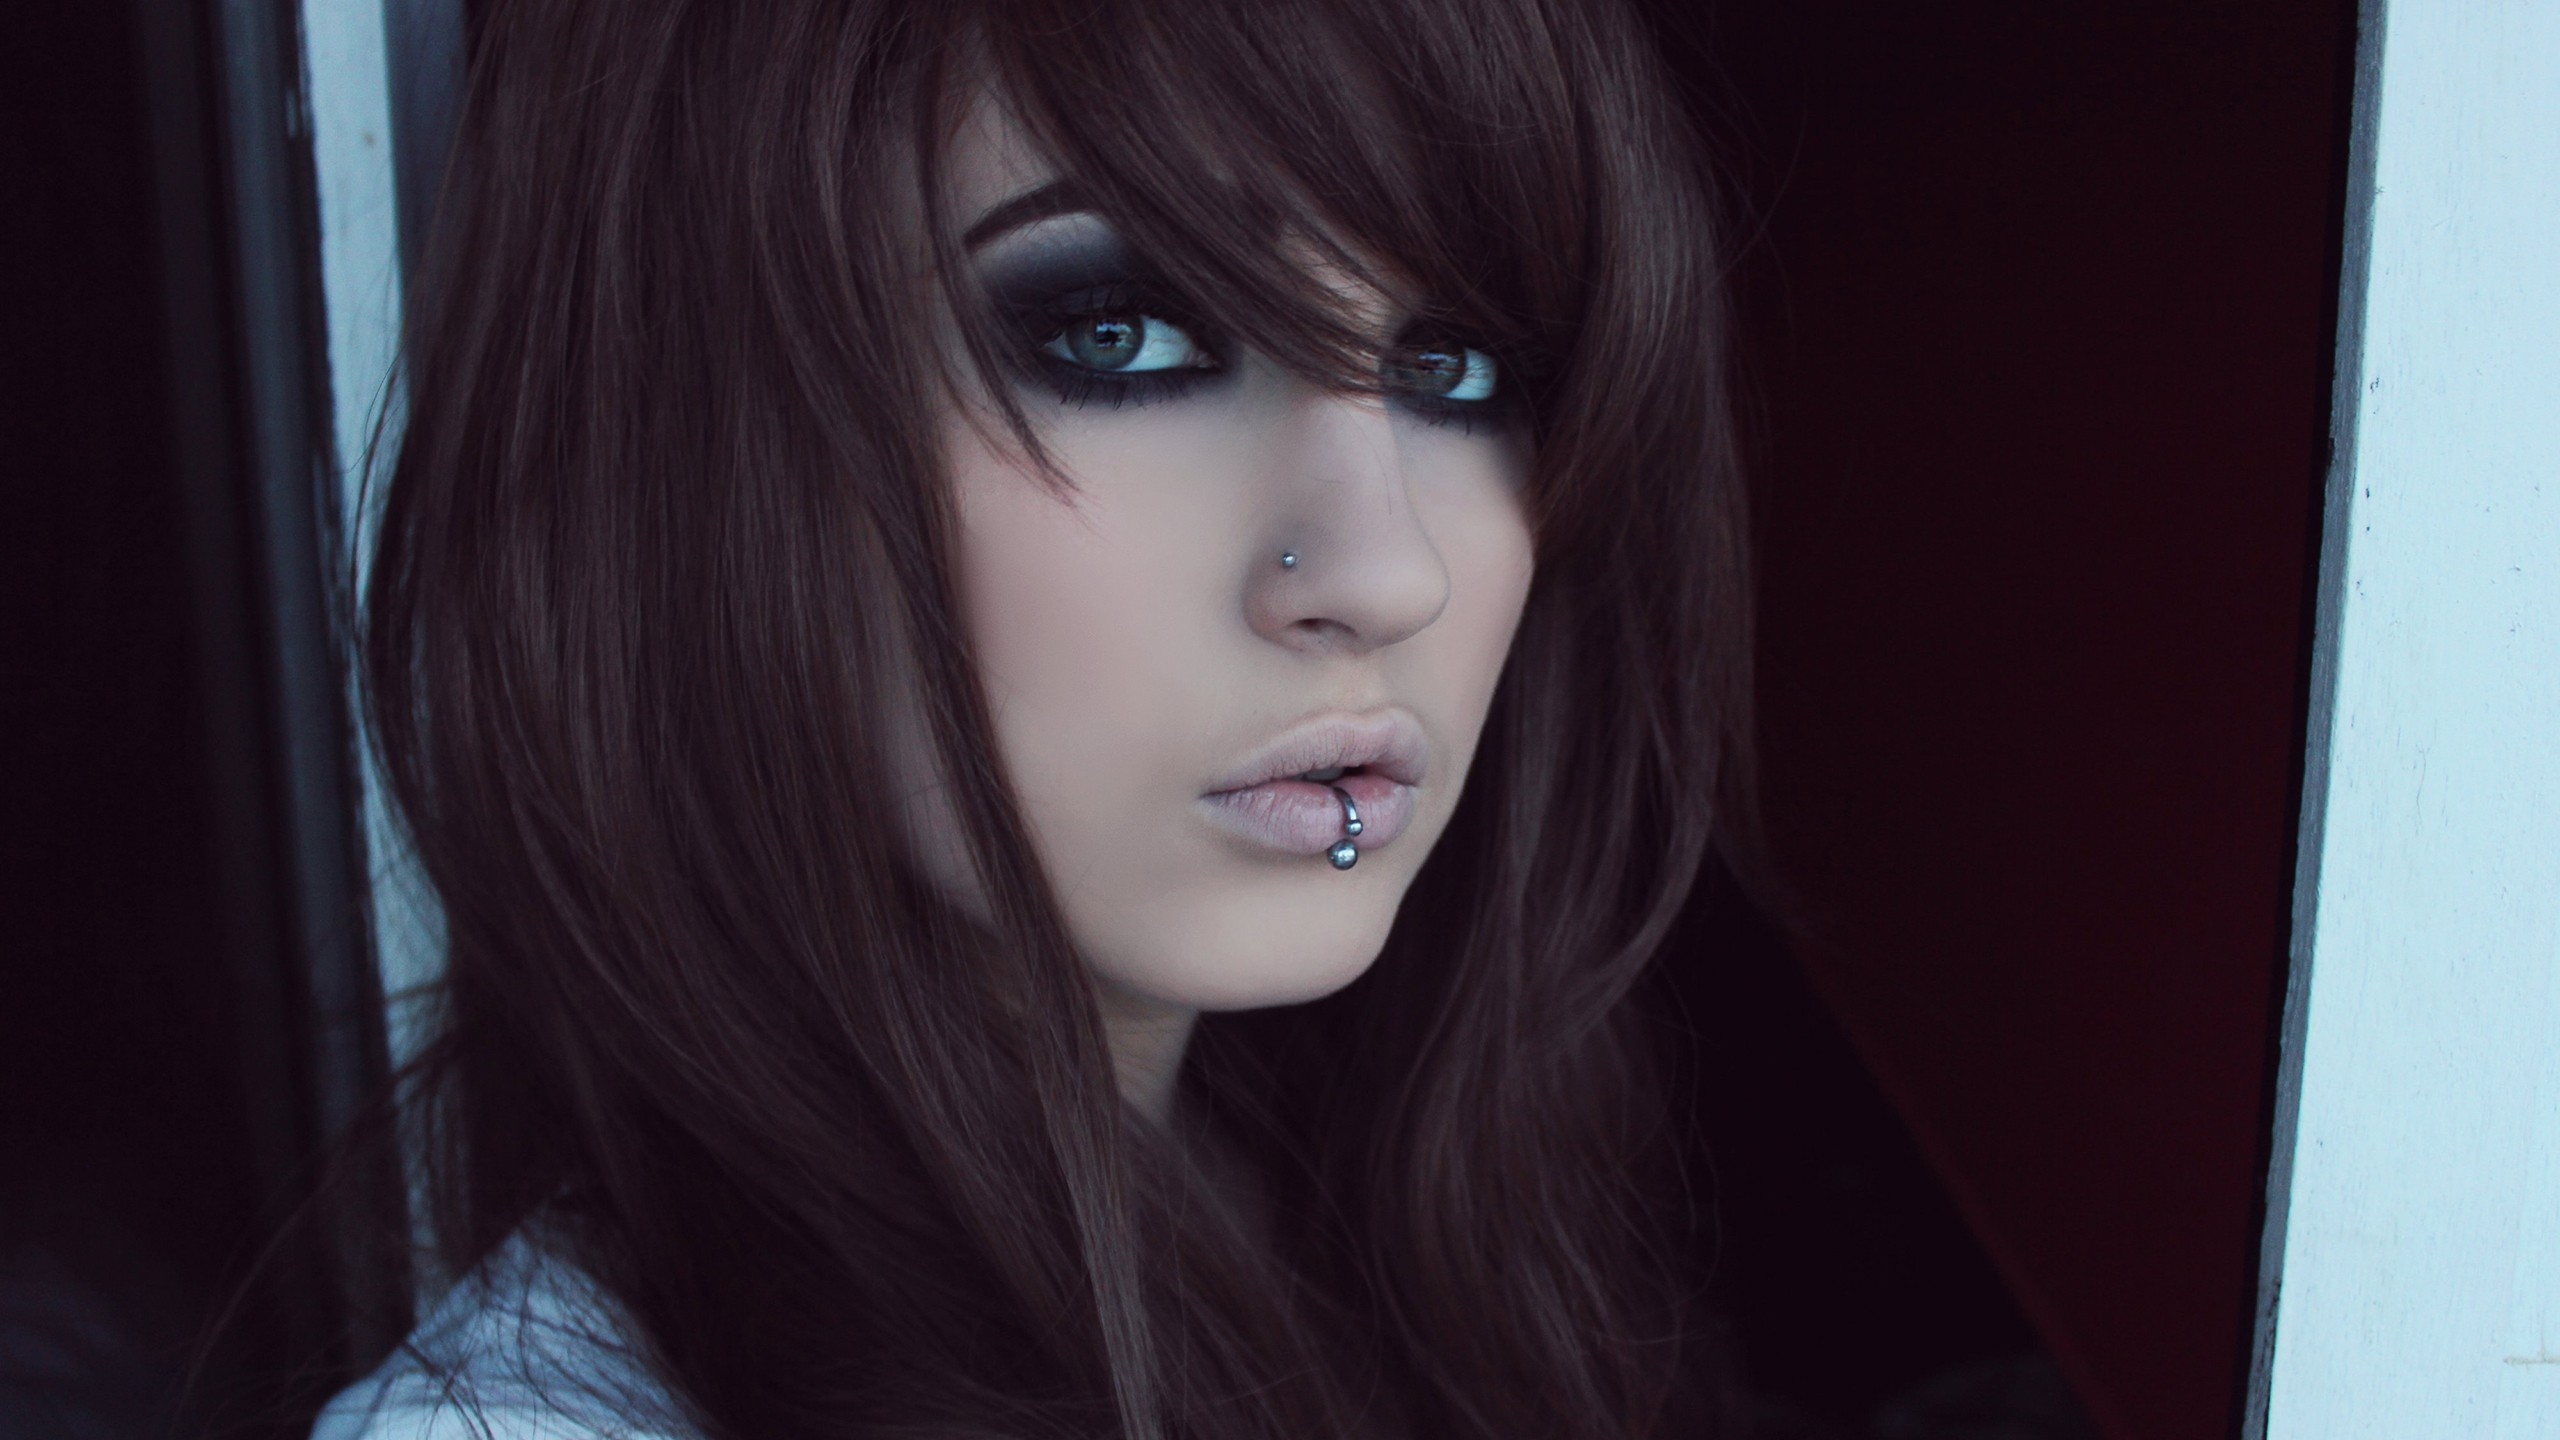 Wallpaper Face Piercing Girl Makeup Mac Imac